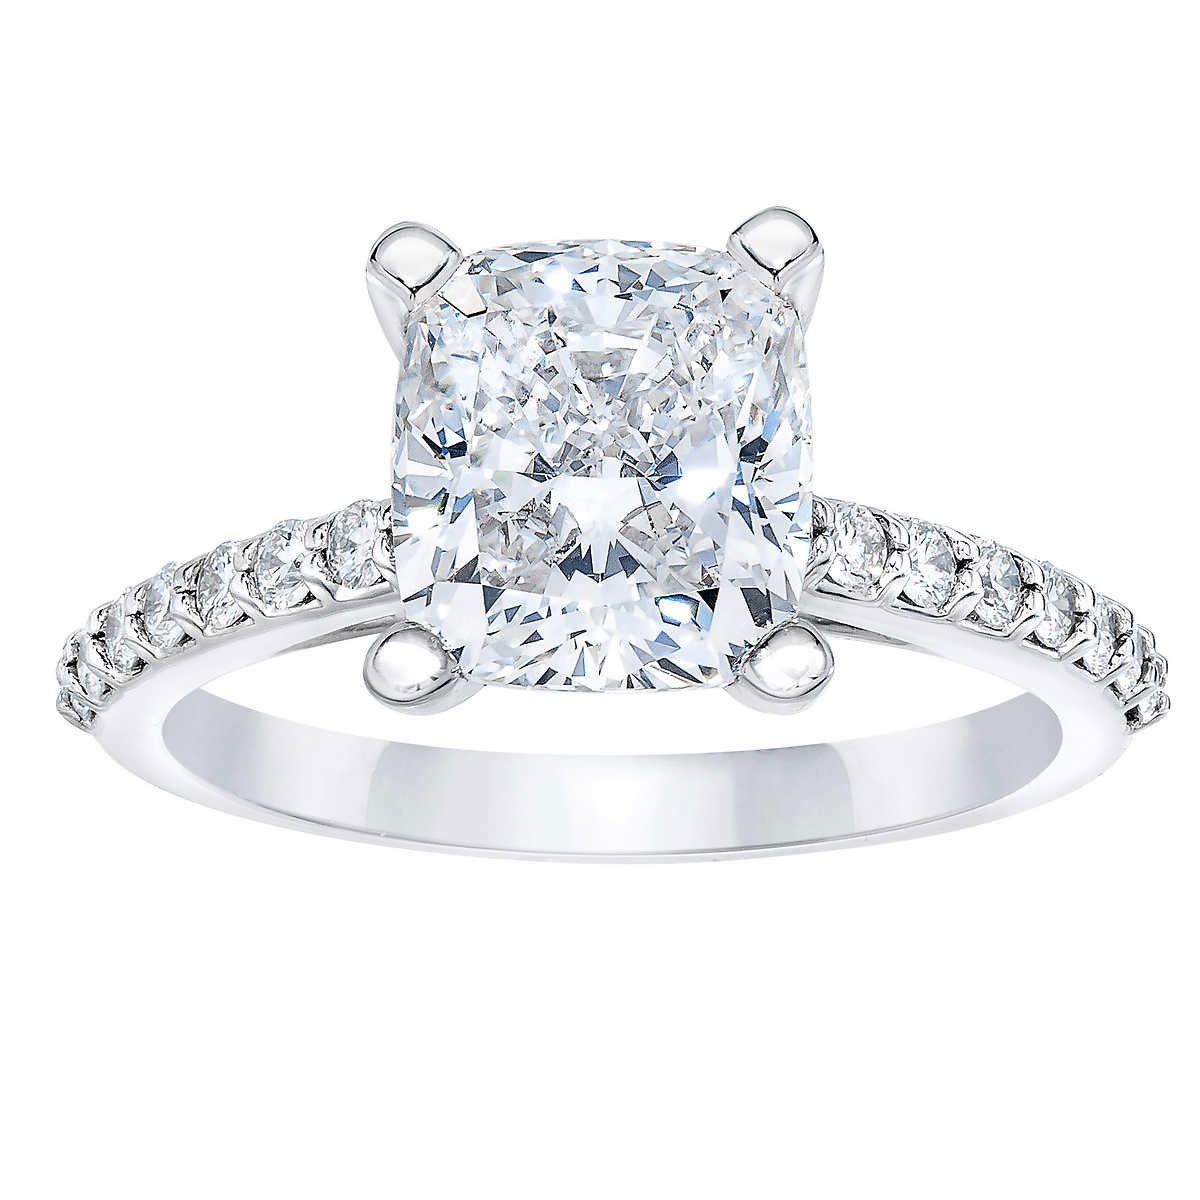 3.66ctw Cushion Cut Diamond Wedding Ring Set, Platinum